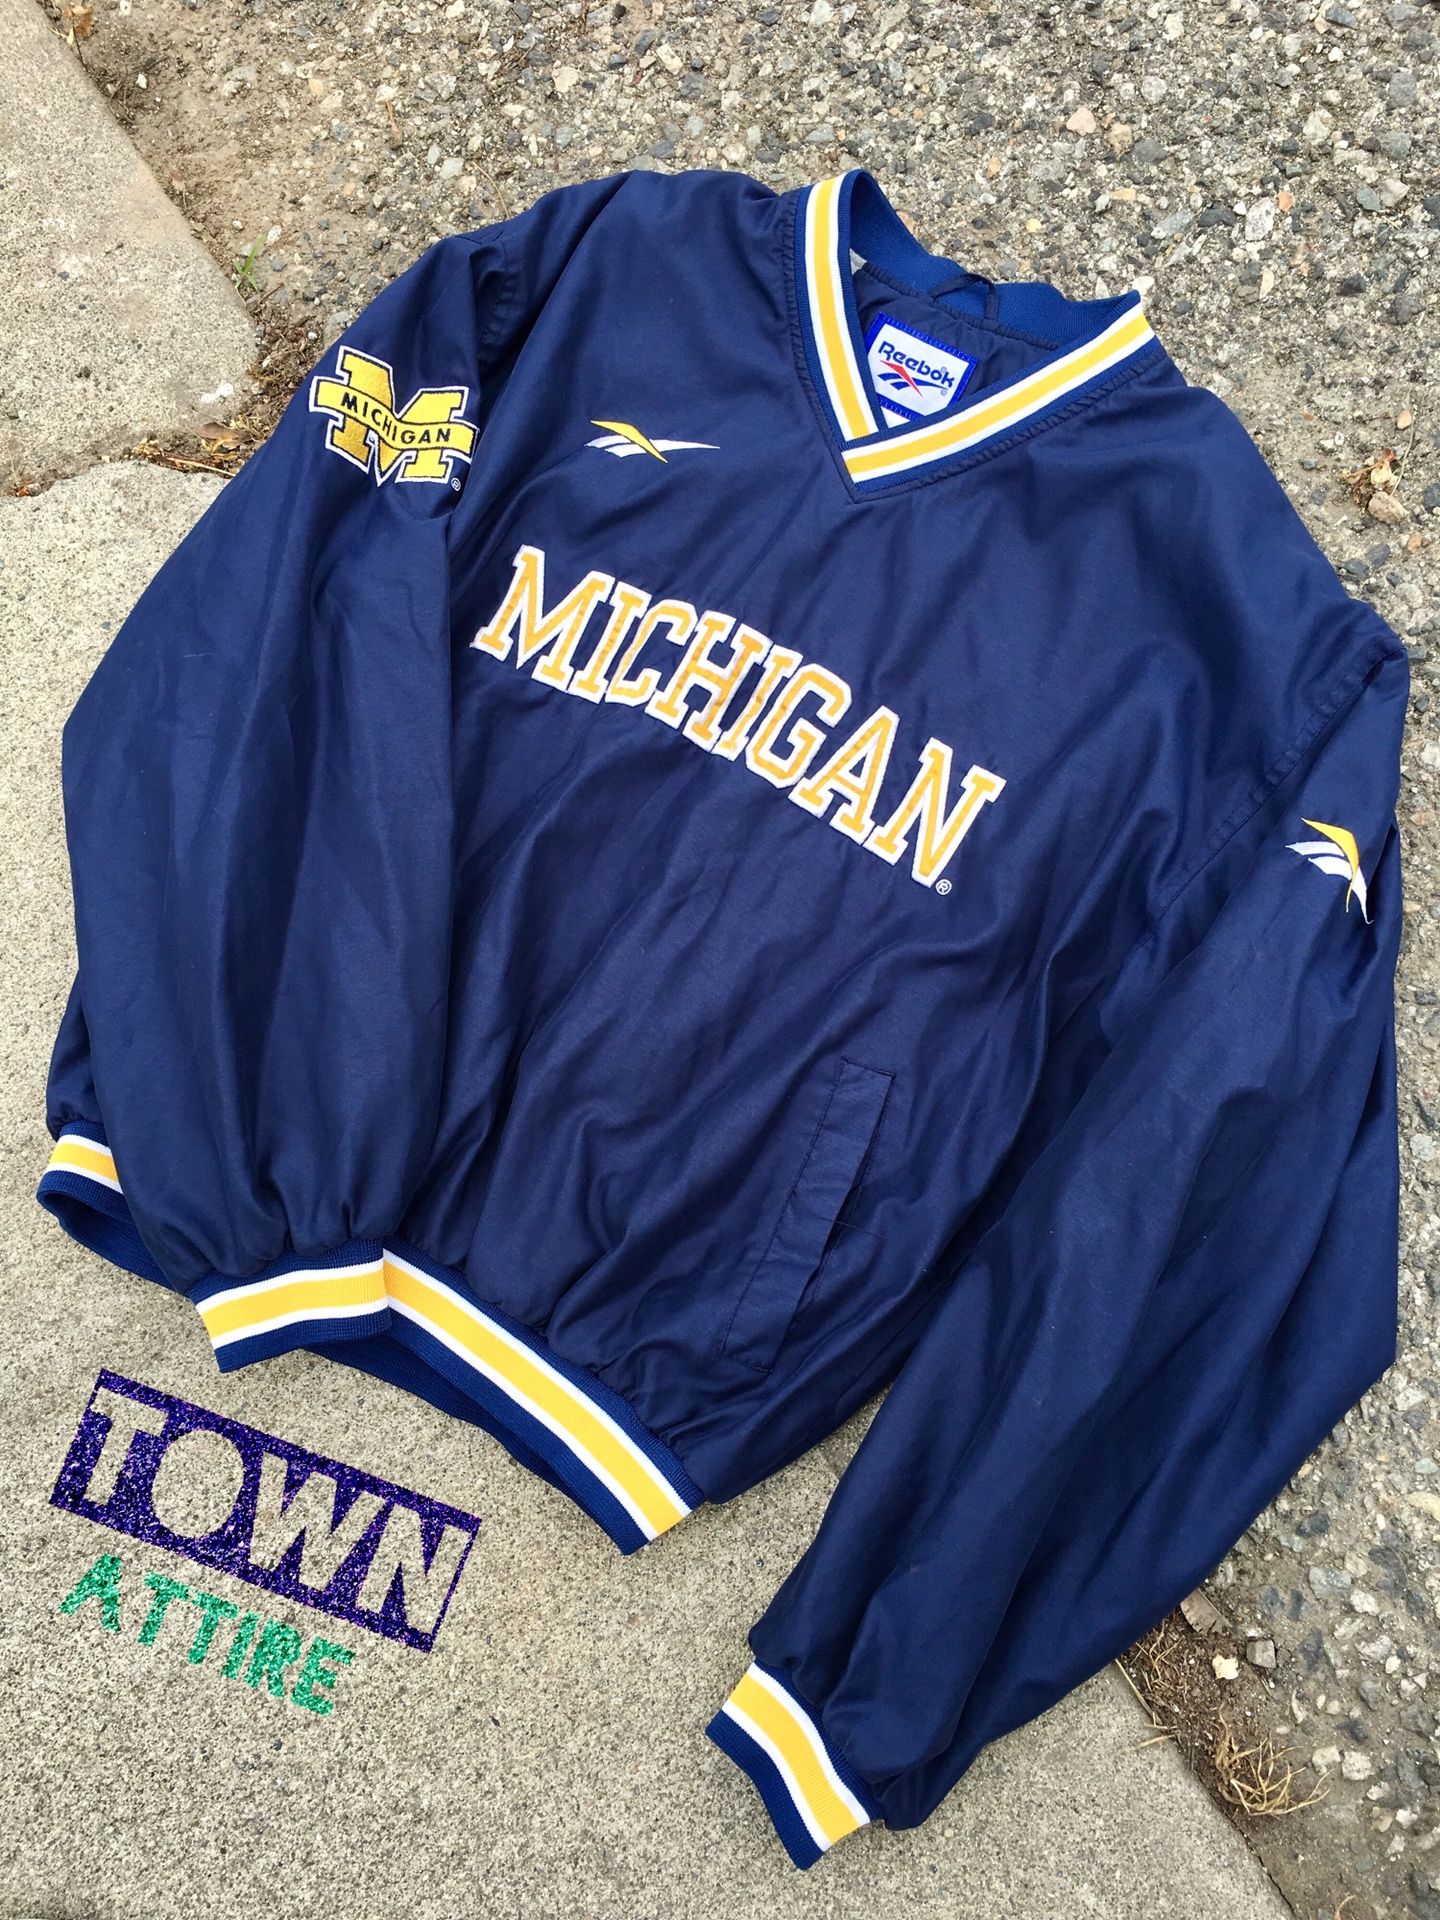 Vintage 90s Michigan Reebok jacket size medium